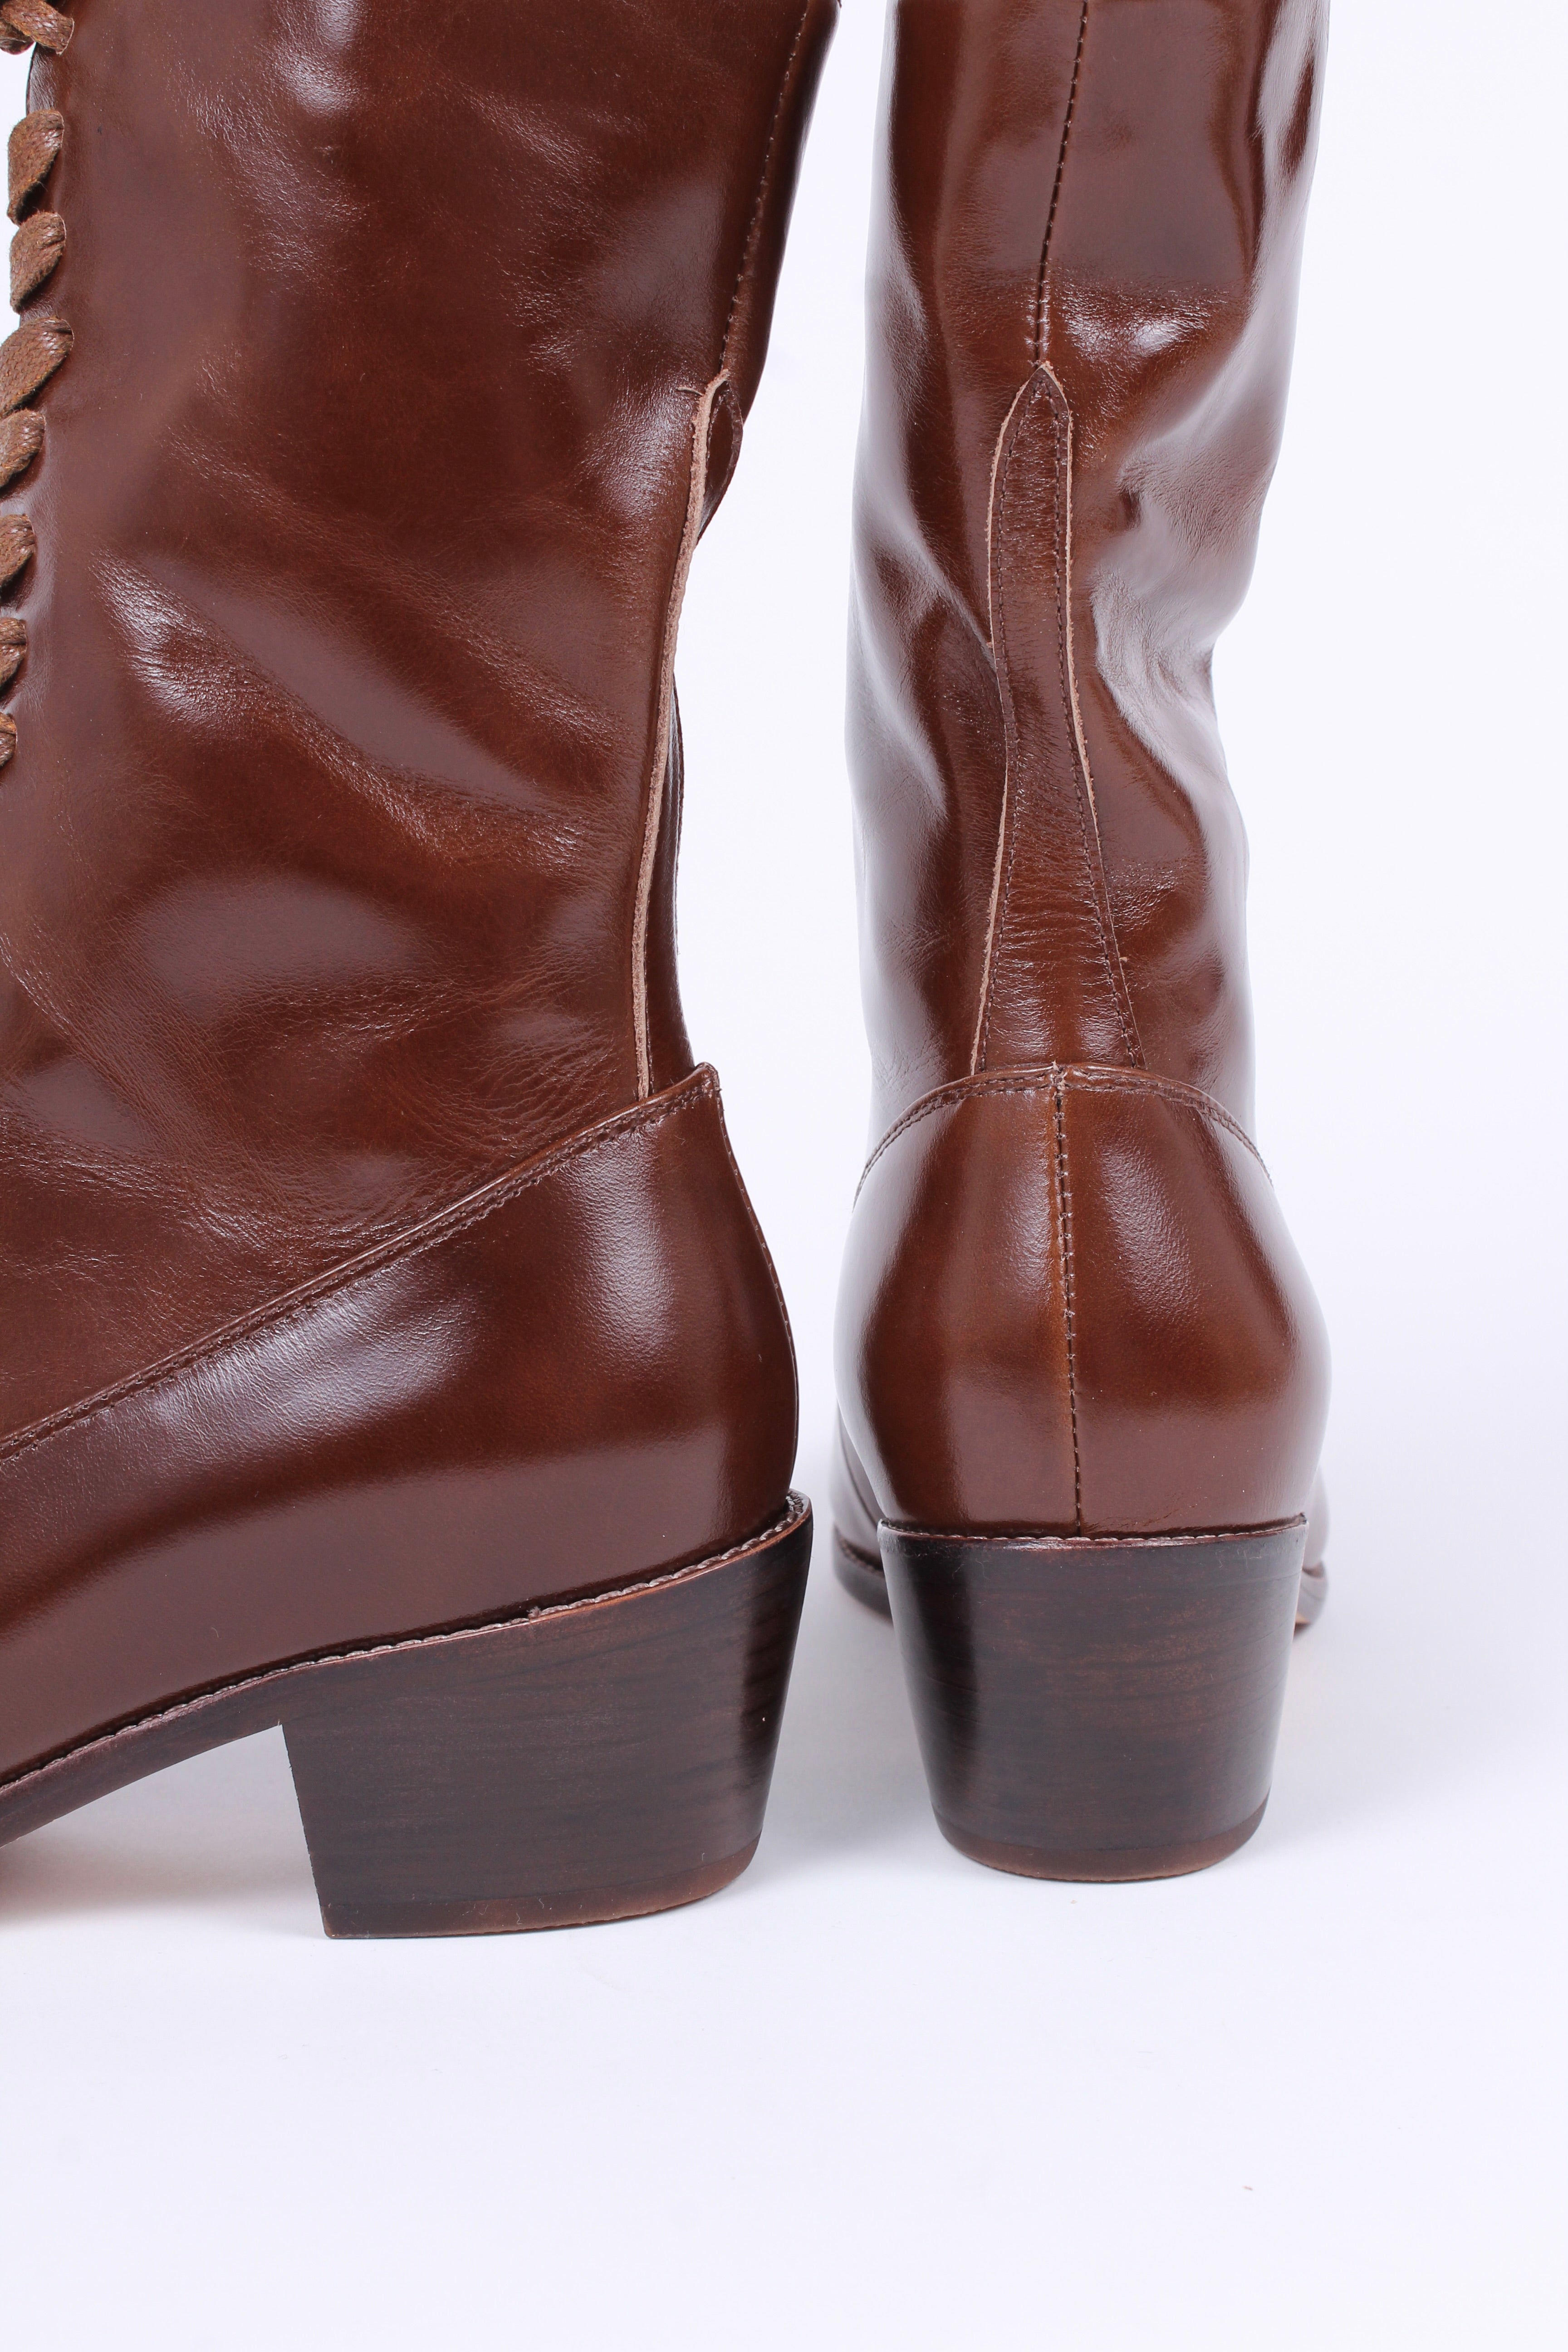 Edwardian everyday walking boot, 1910 - brown - Alice